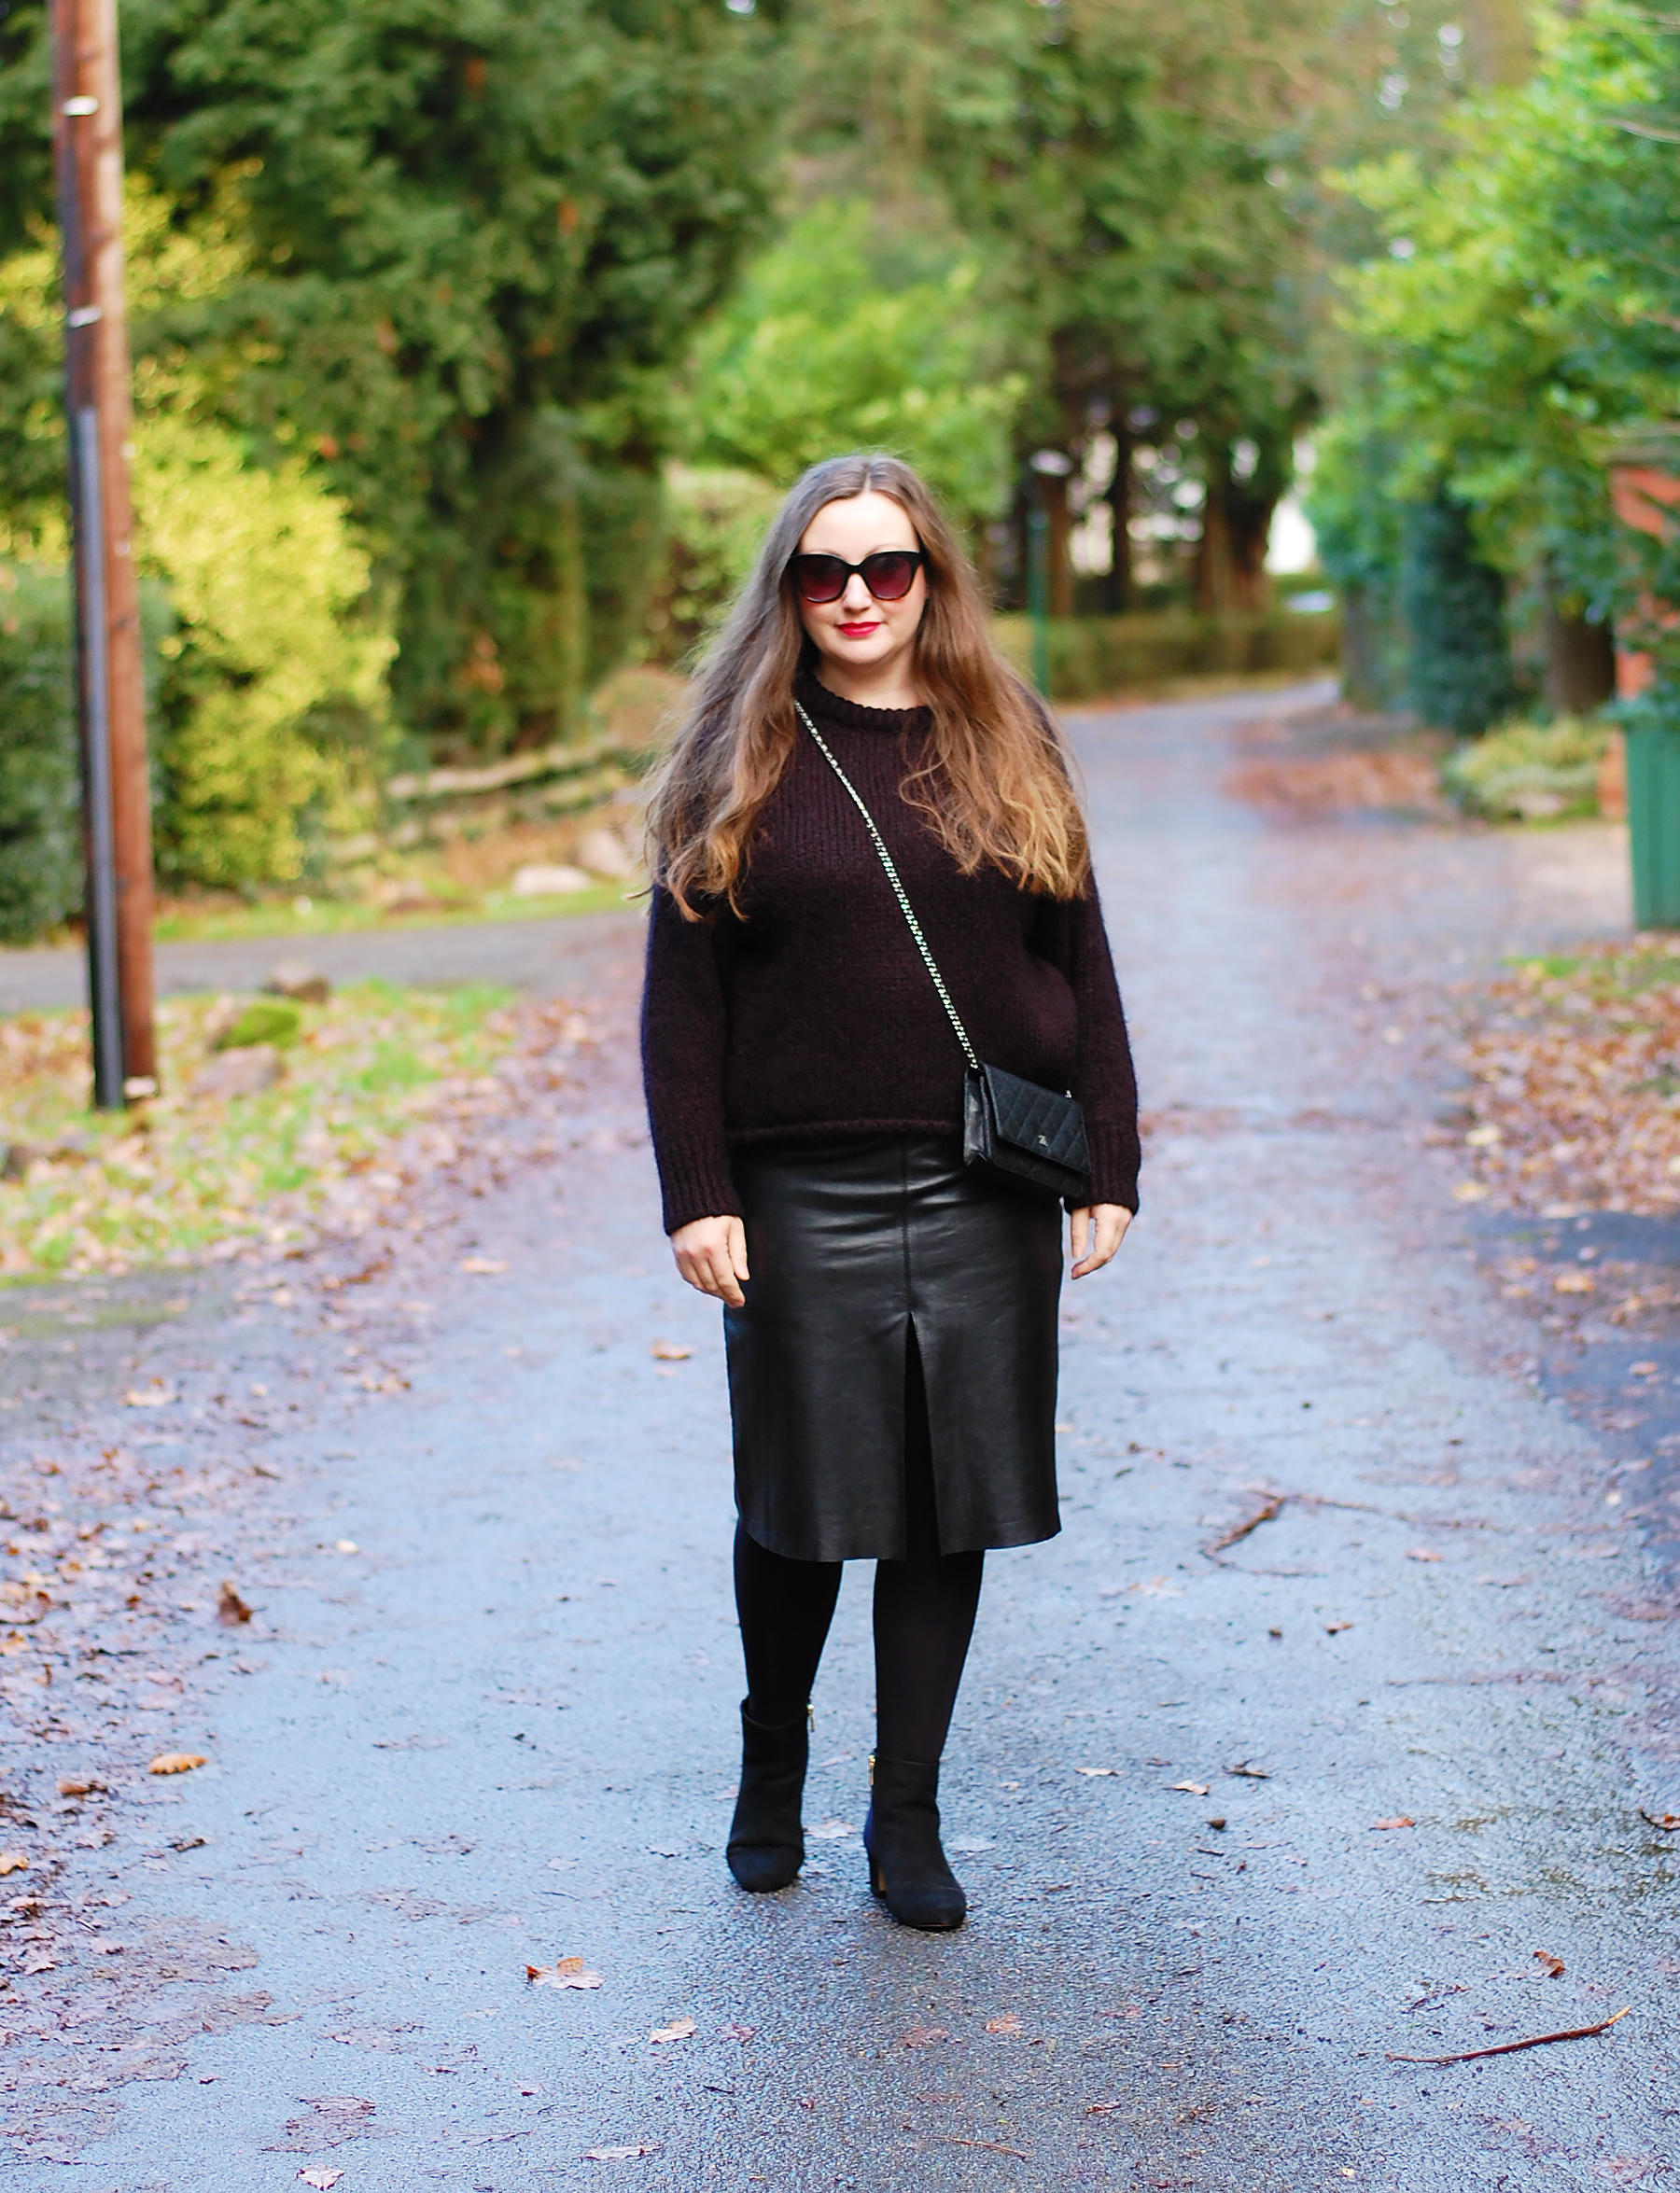 Gemma From Jacquard Flower Uk Fashion Blog Wearing Black Leather Midi Skirt